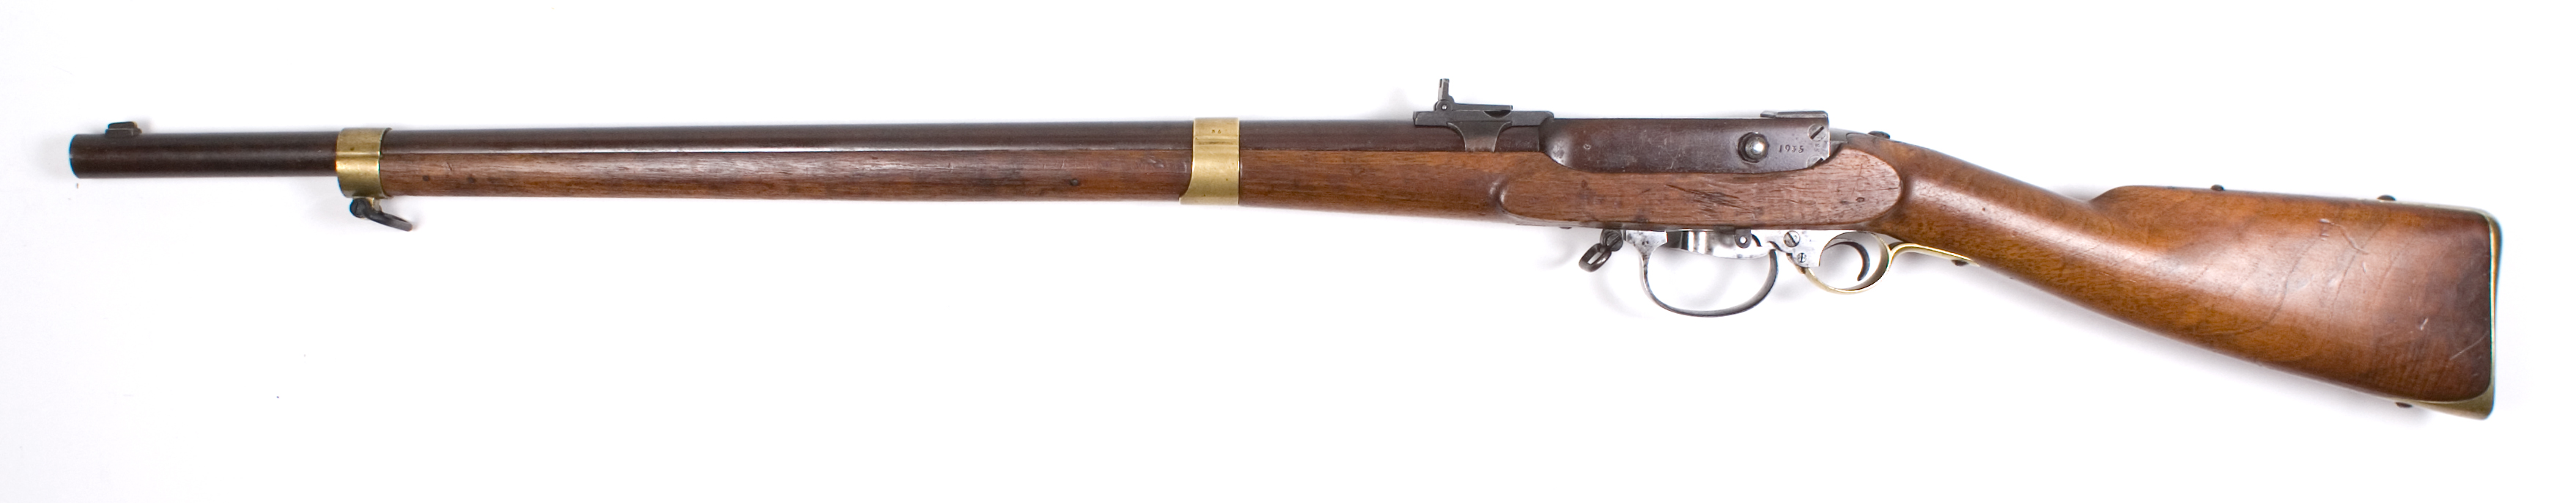 ./guns/rifle/bilder/Rifle-Herzberg-Kammerlader-M1849-55-59-1935-2.jpg